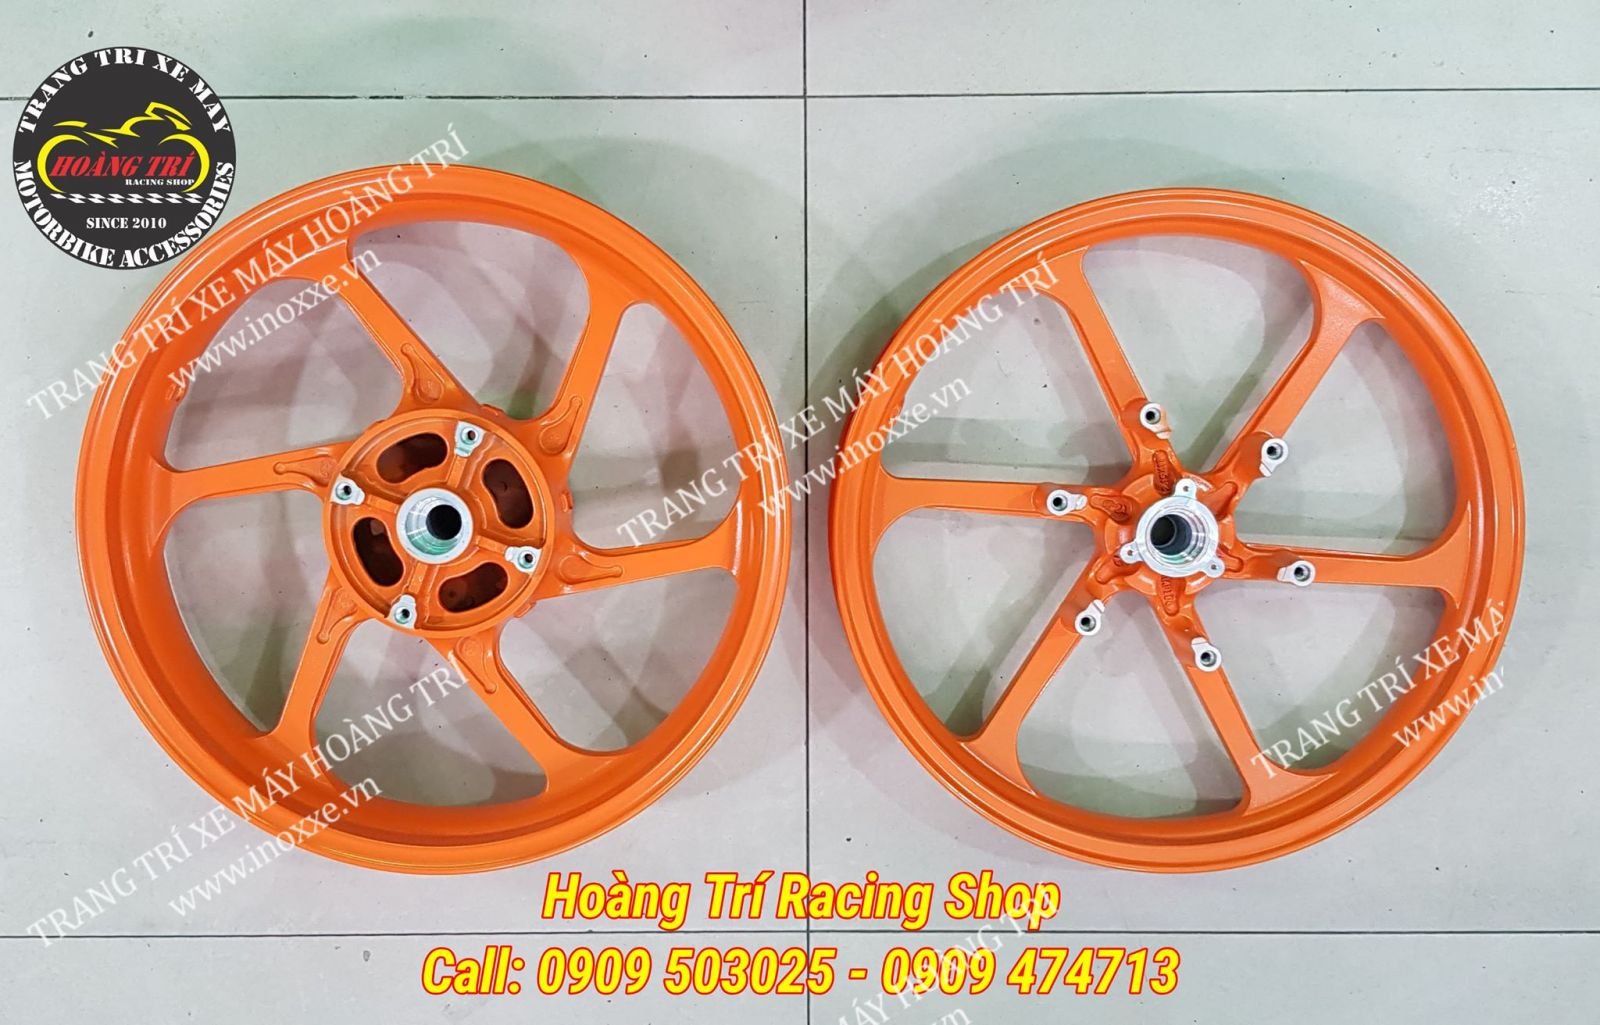 6-piece Rapido wheel for Winner X in orange 